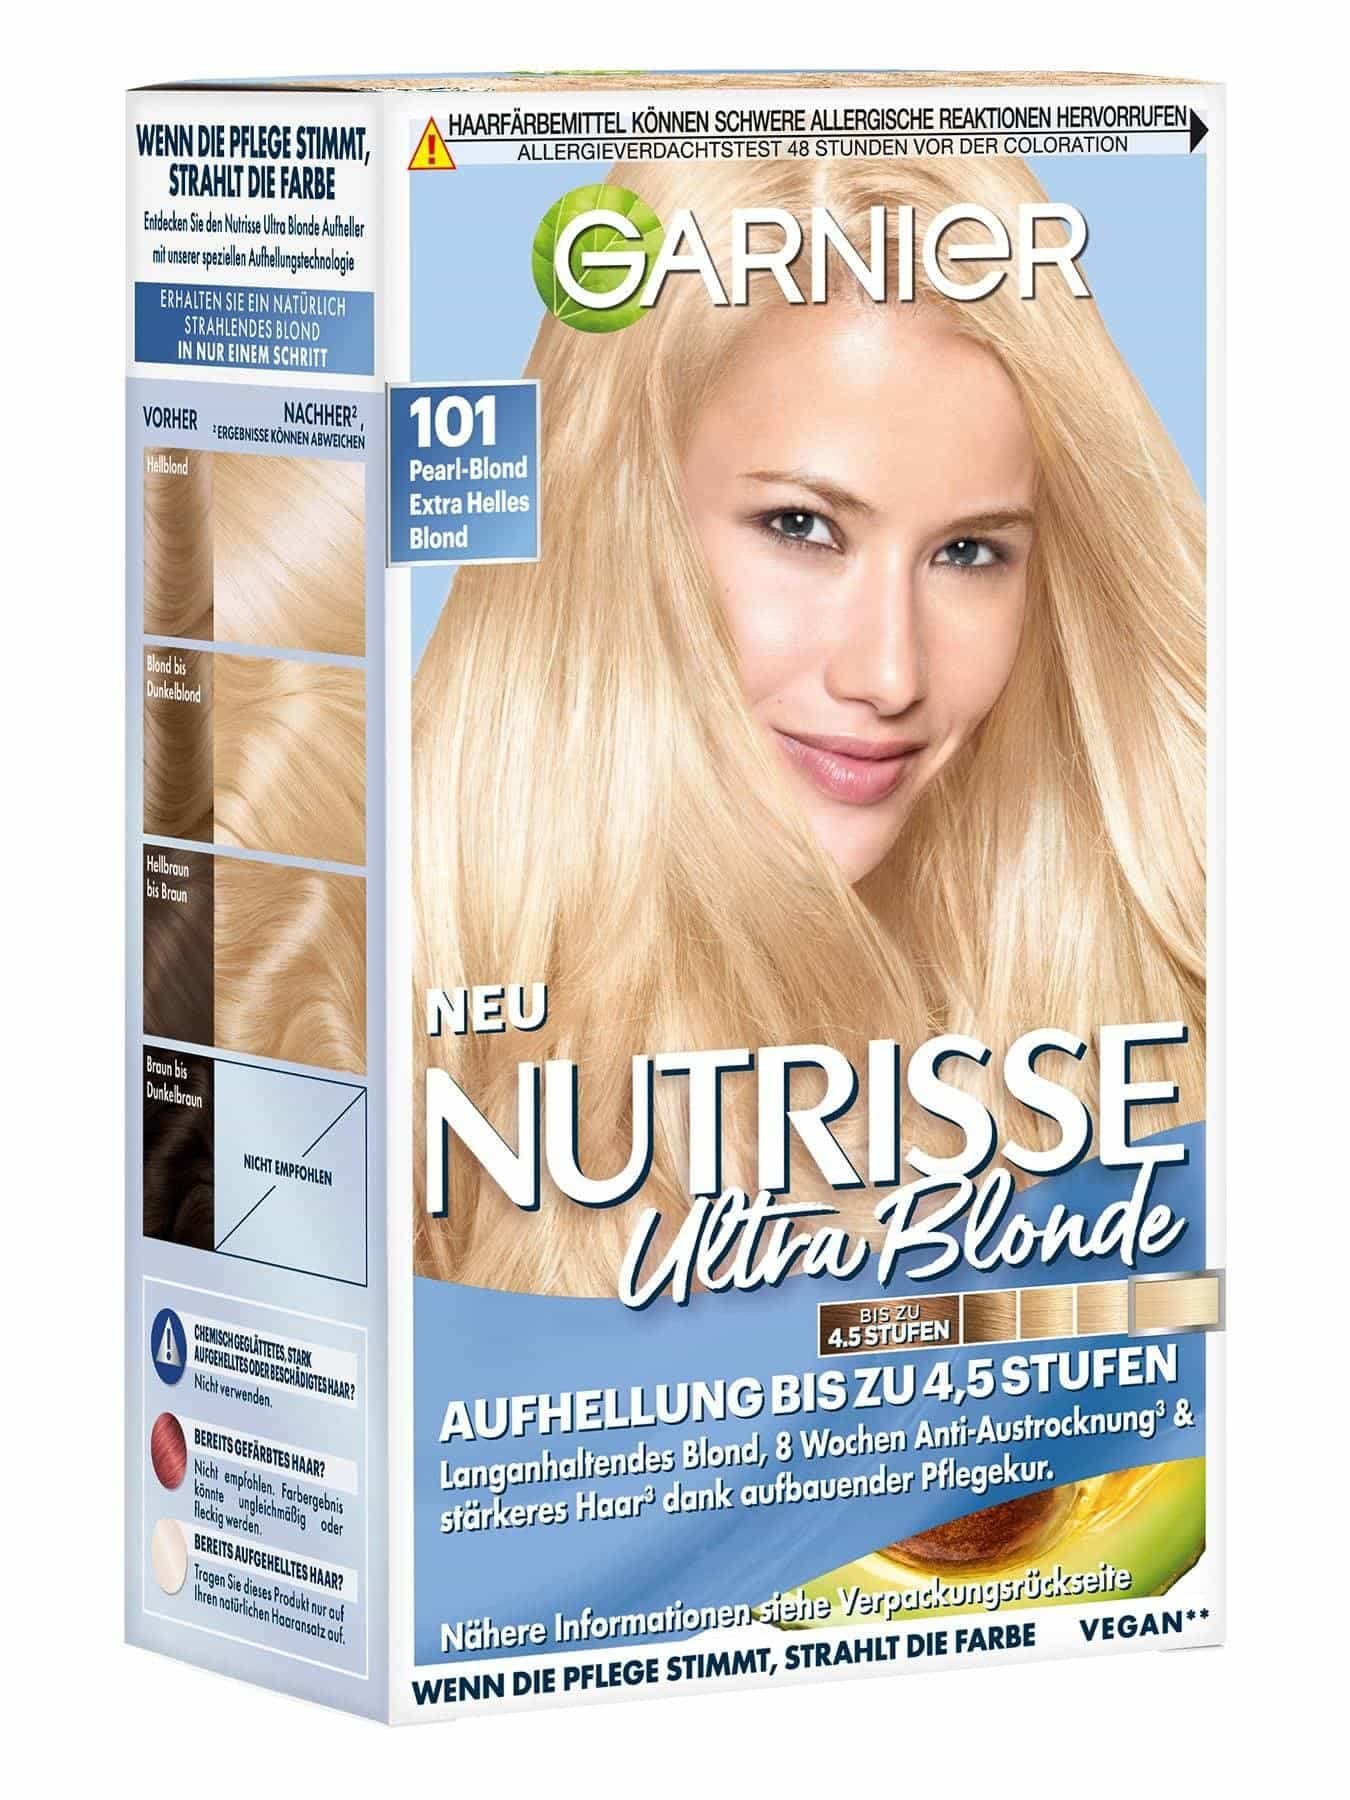 Nutrisse Ultra Crème Pearlblond Garnier 101 Blond Nr. Helles Extra 